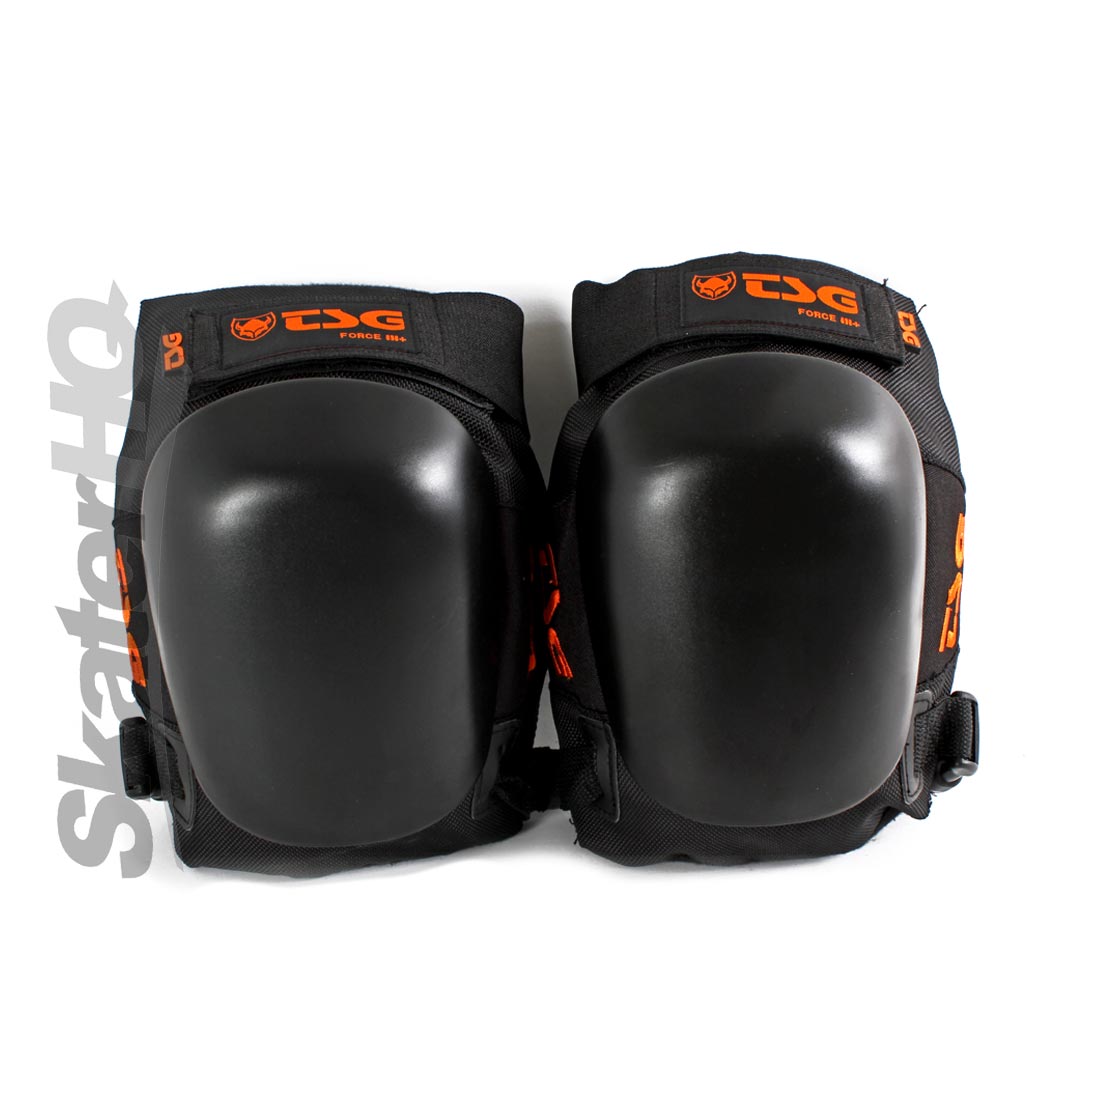 TSG Force 3 Plus D30 Kneepad M Protective Gear